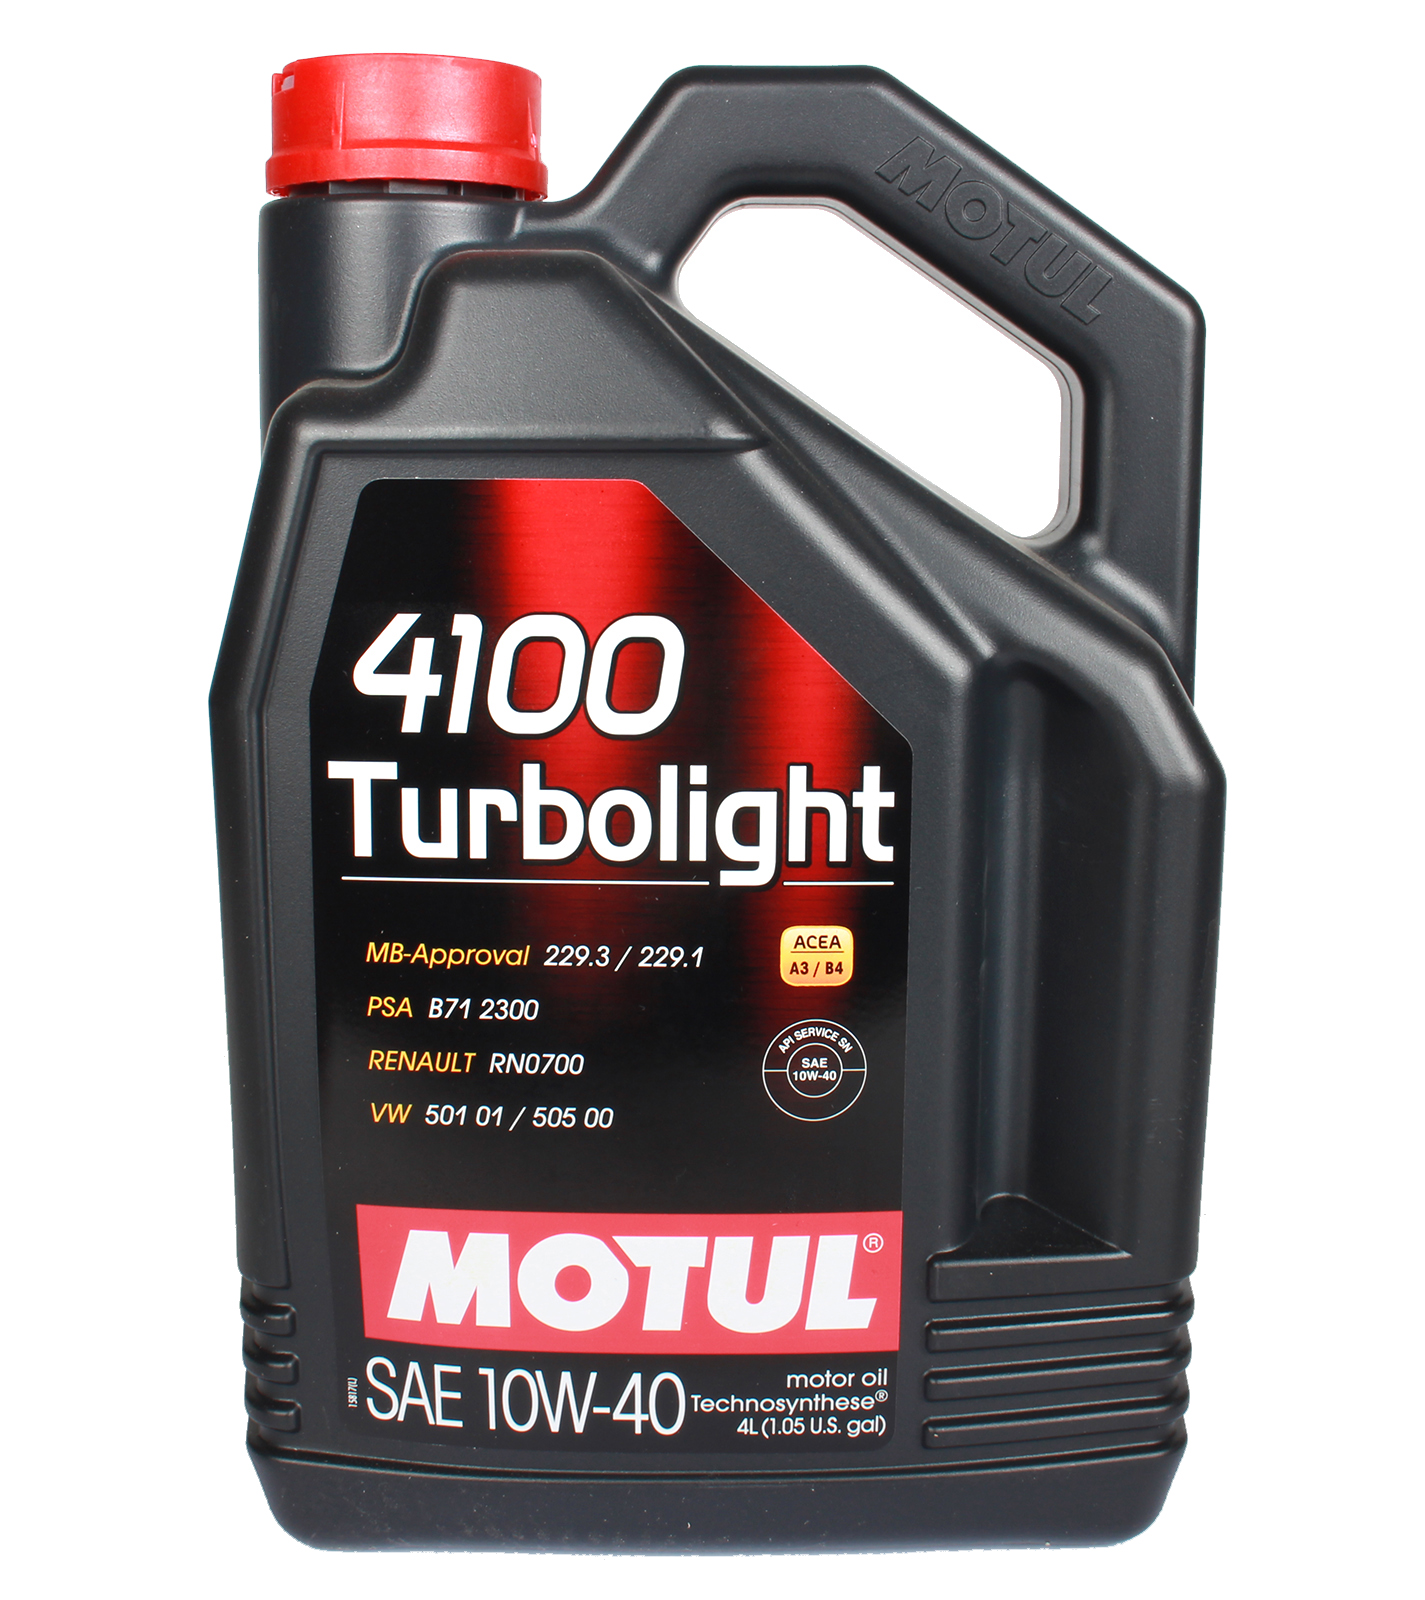 Моторное масло Motul 4100 Turbolight 100355 10W40 4л